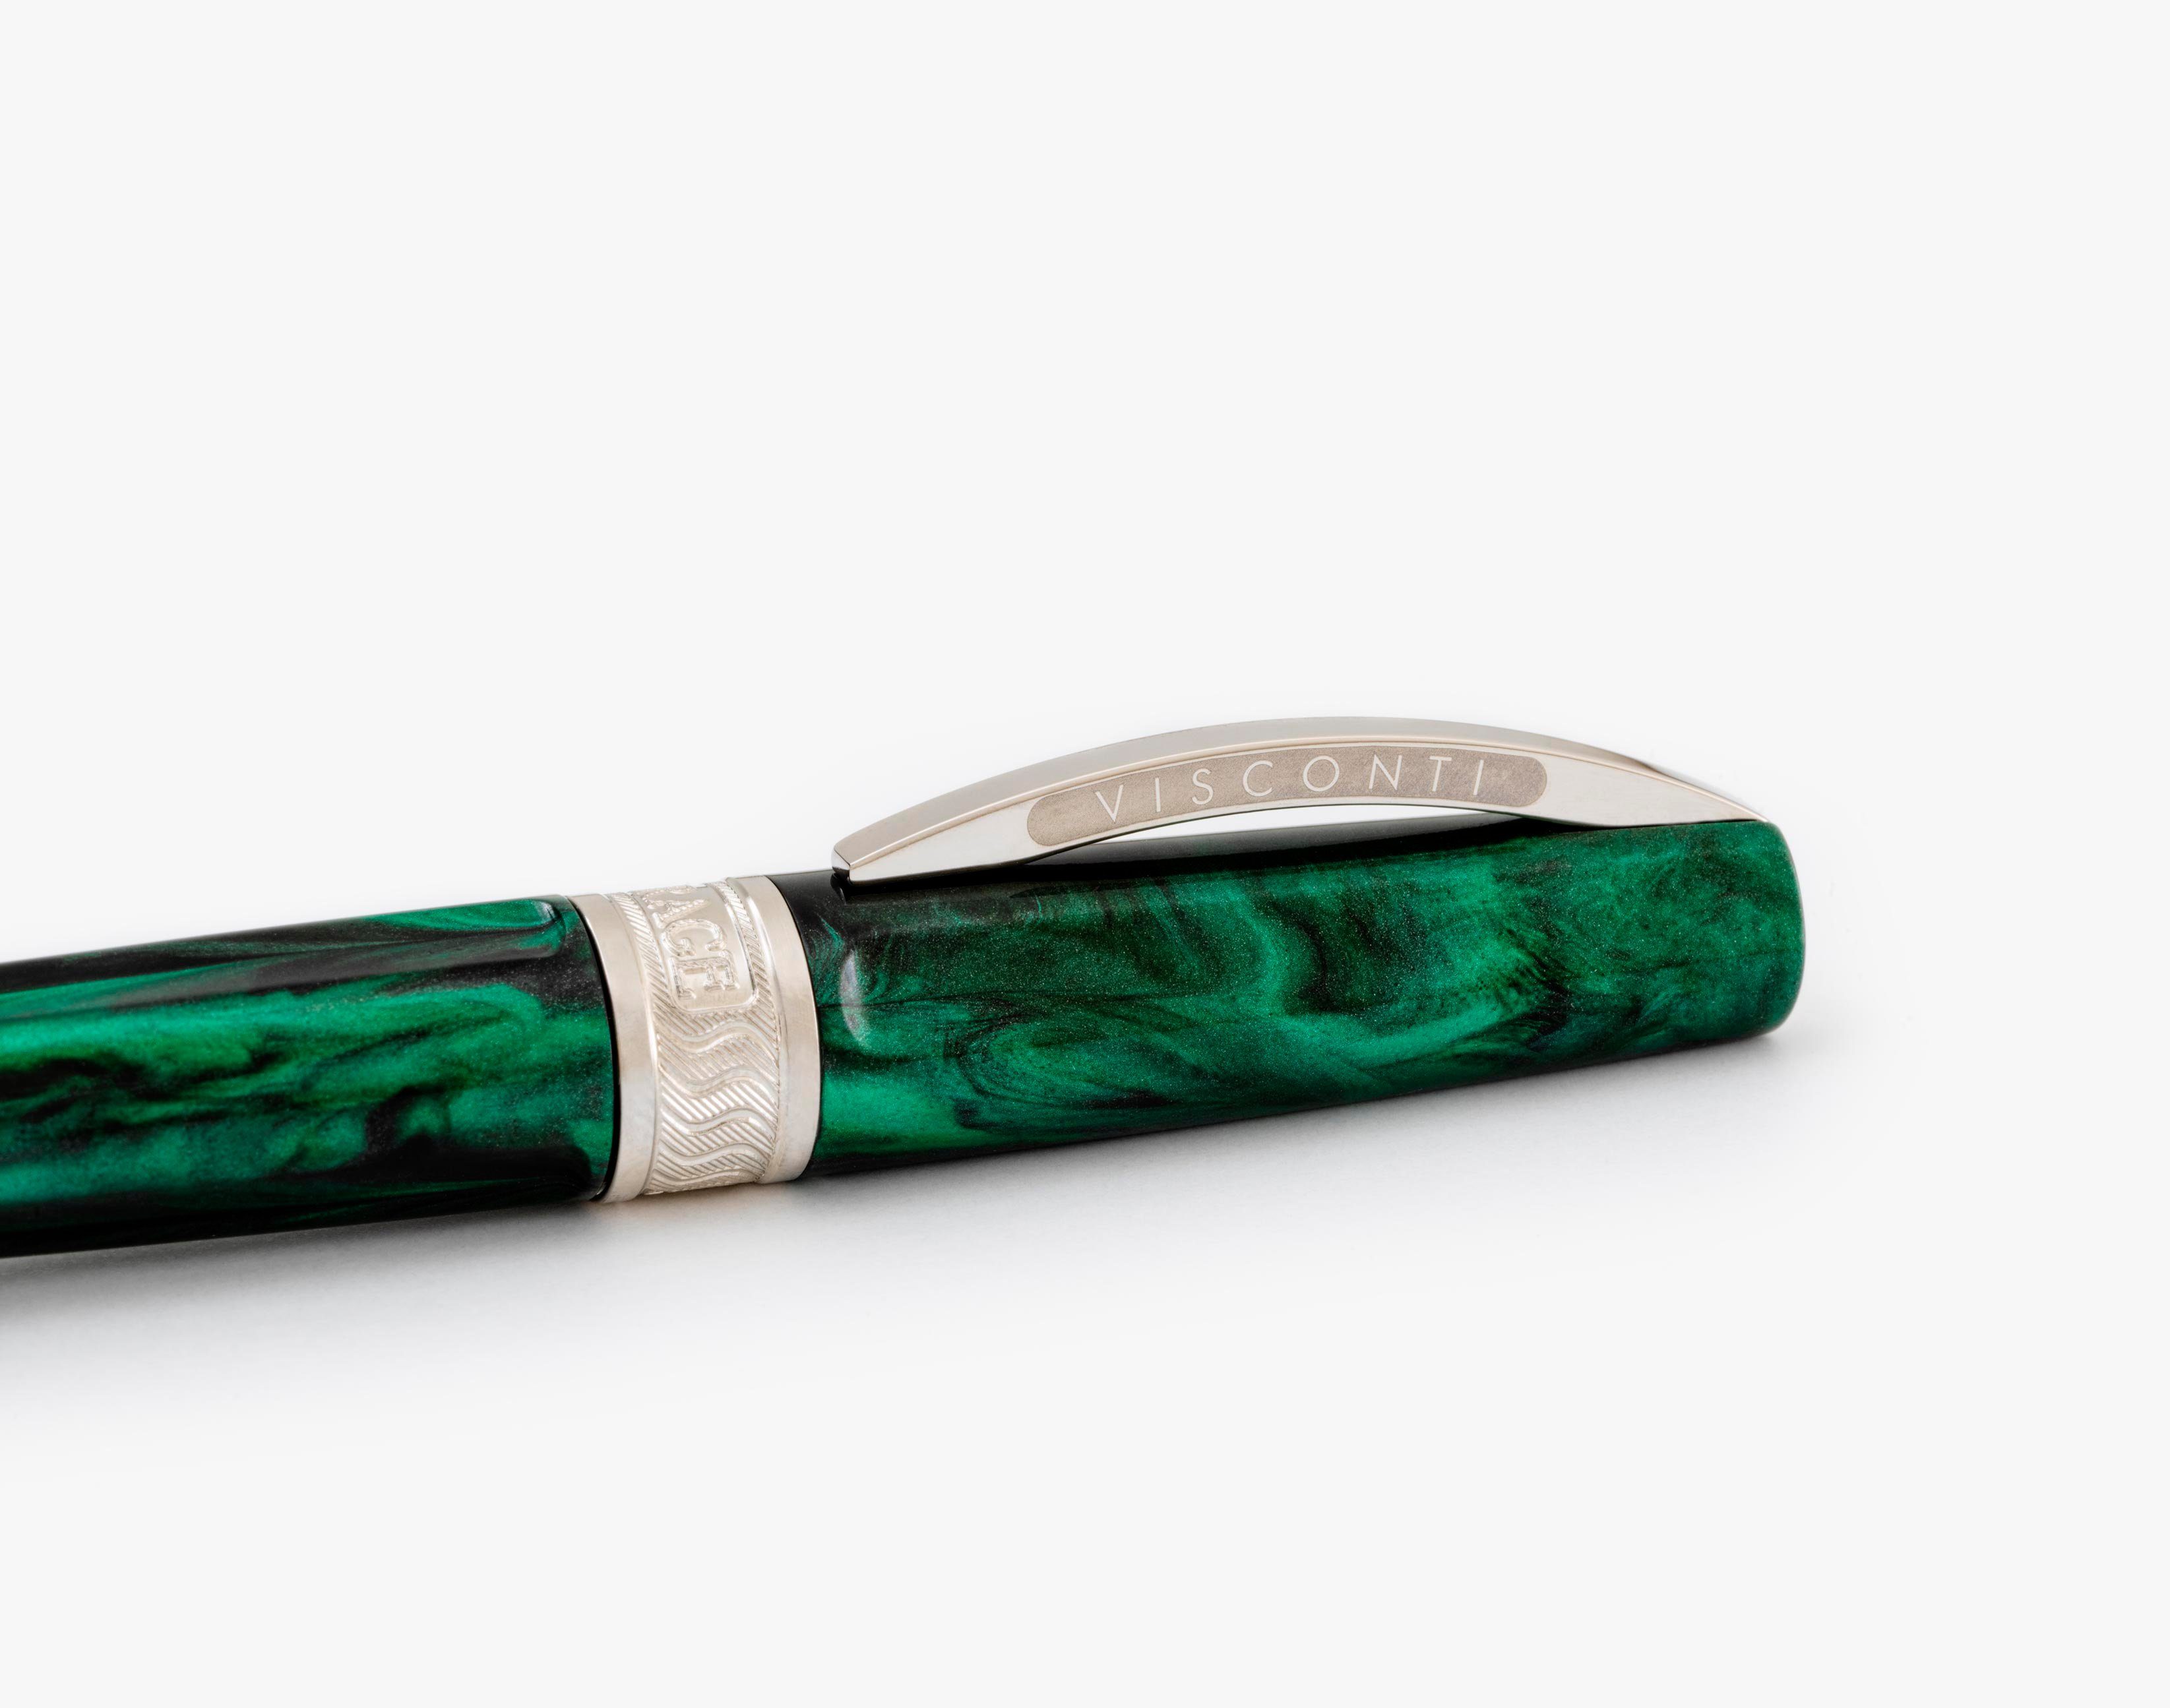 Visconti Kugelschreiber Set) Kugelschreiber Mirage grün, Emerald Acryl Resin Visconti Ballpoint (kein